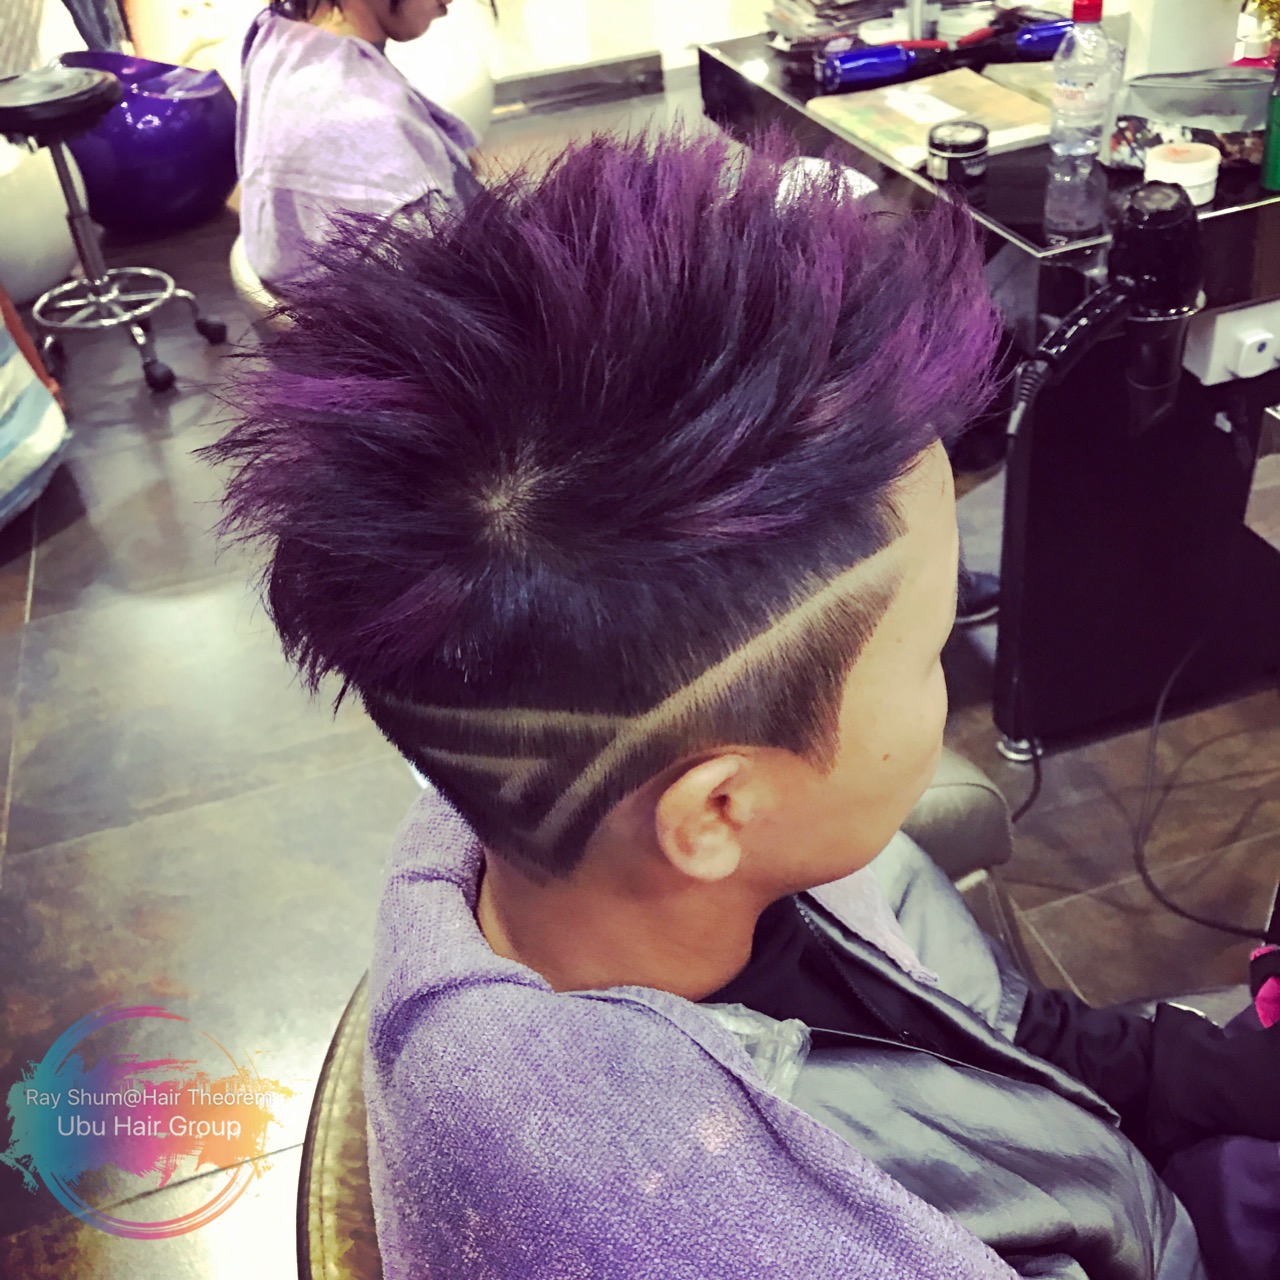 髮型作品參考:Hair tattoo+purple color